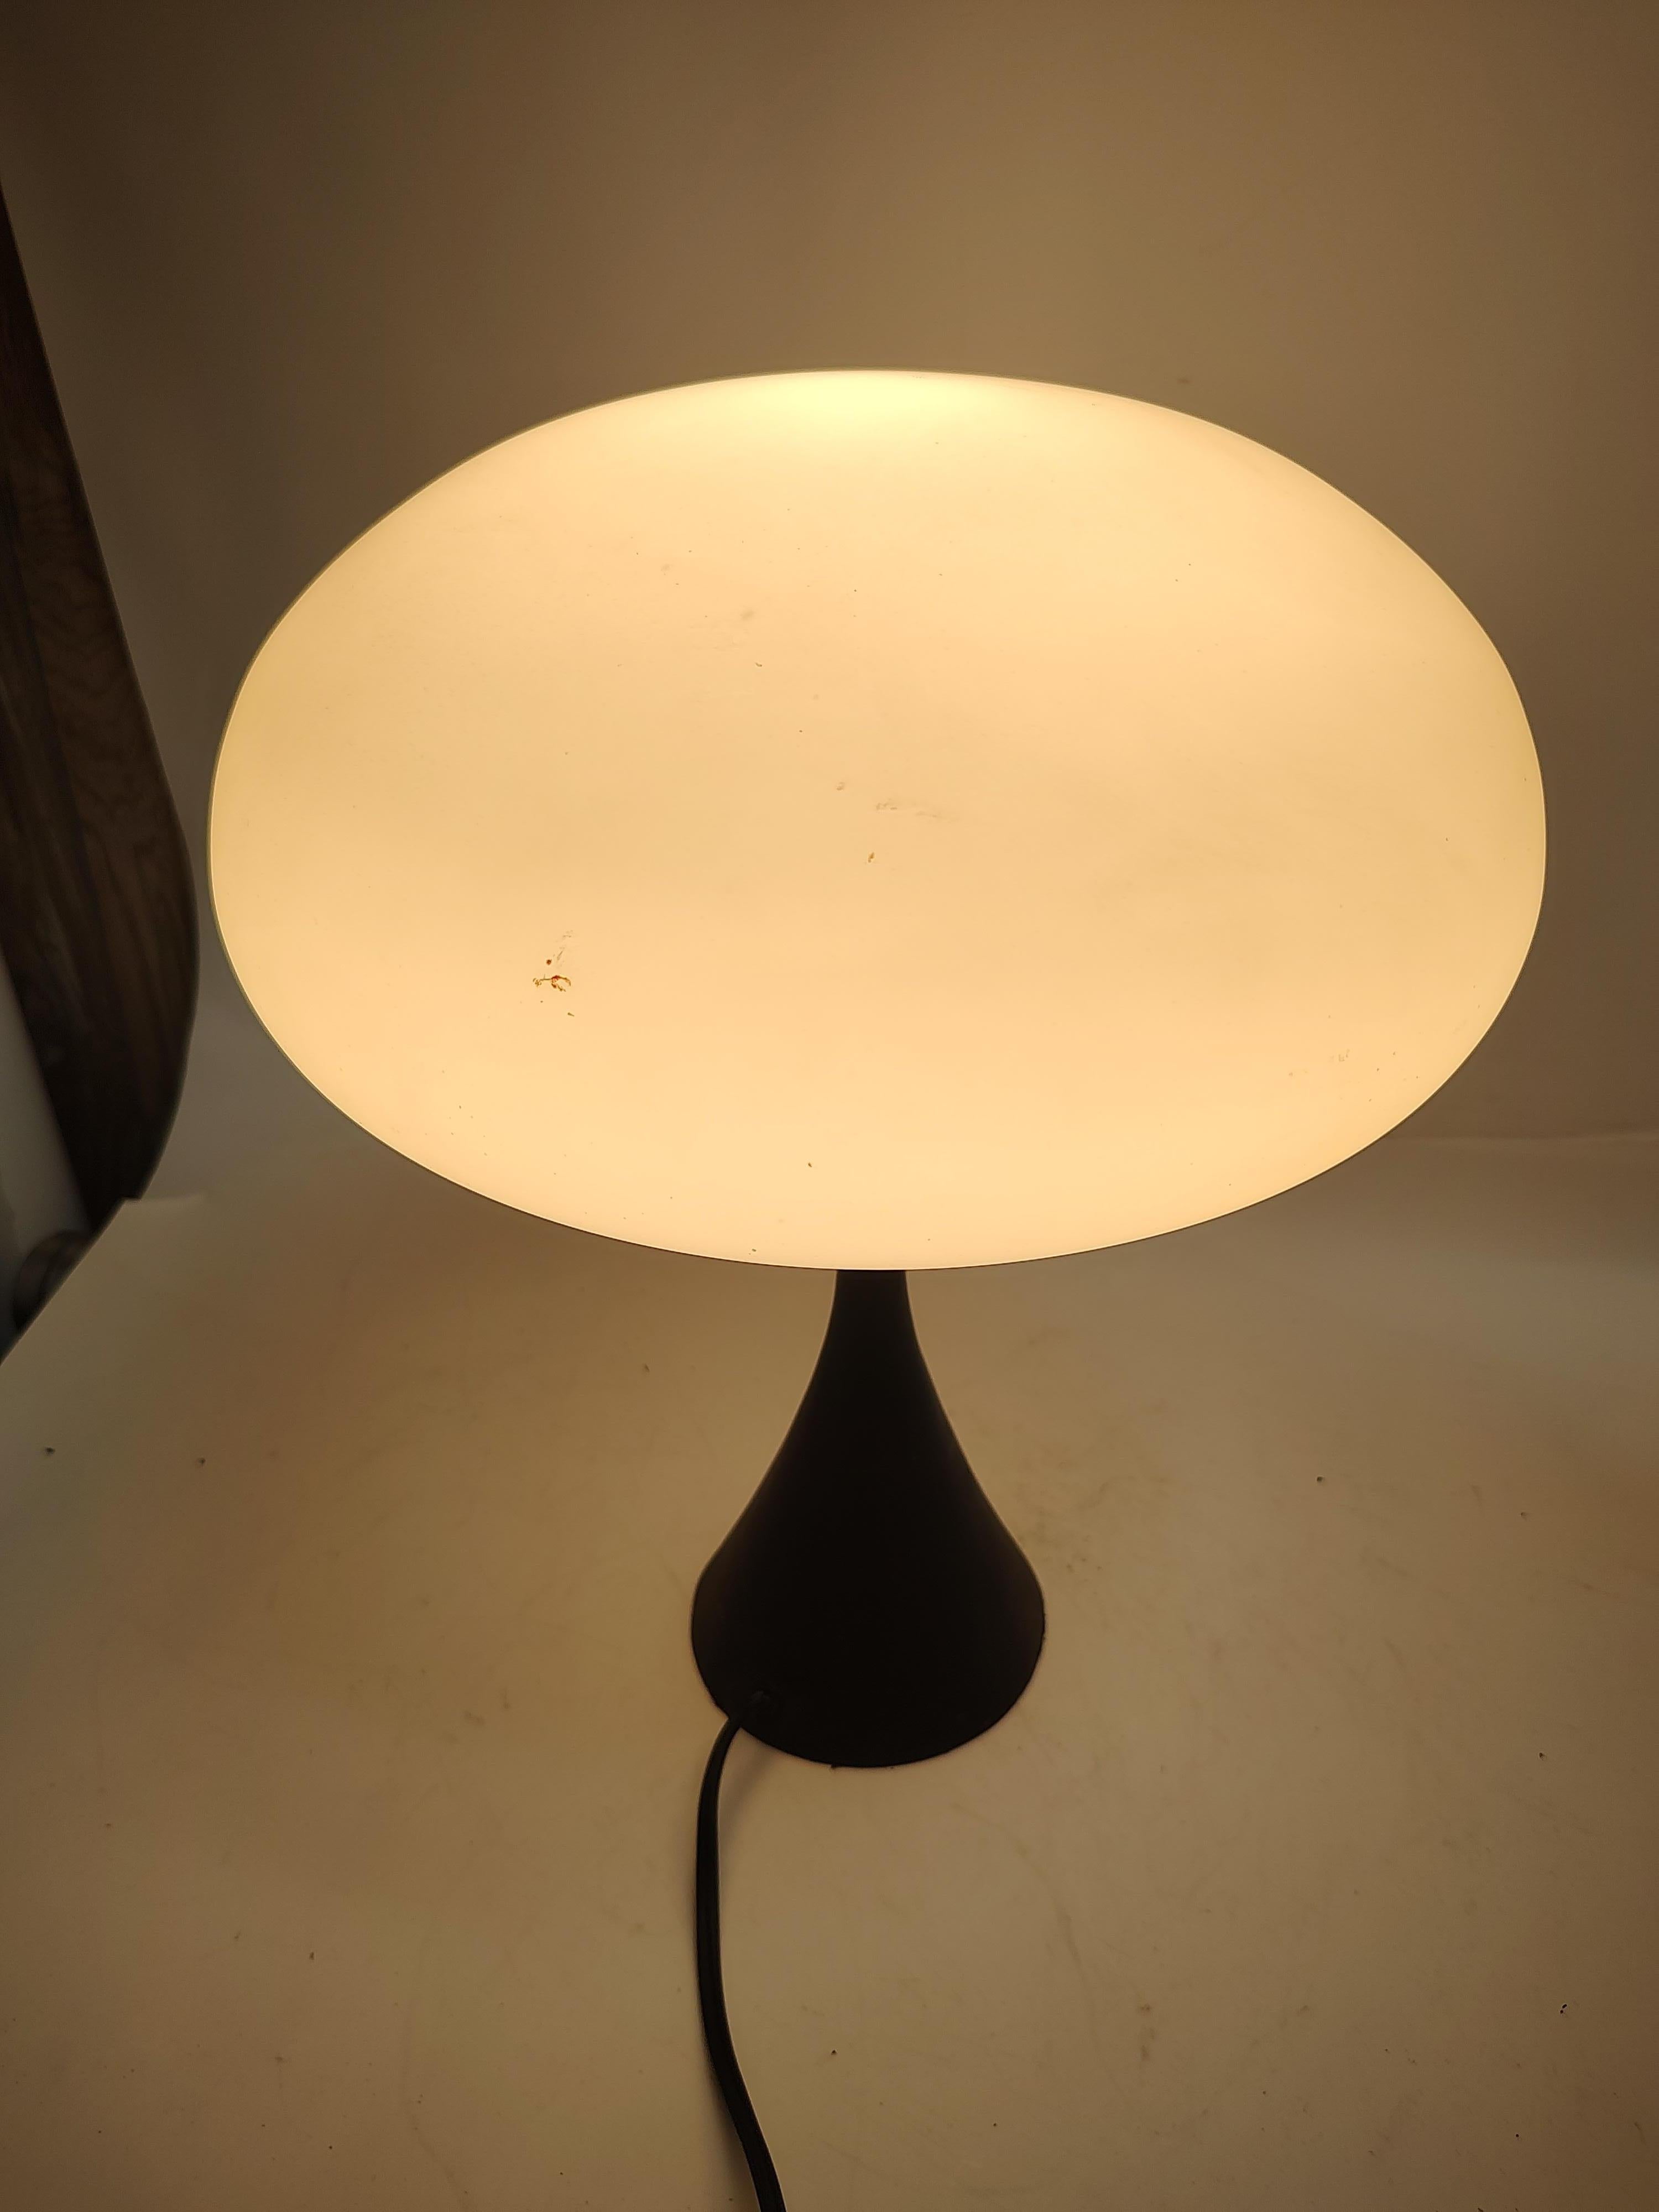 Mid Century Modern Sculptural Mushroom Table Lamp Attributed to Laurel Lamp Co. 1